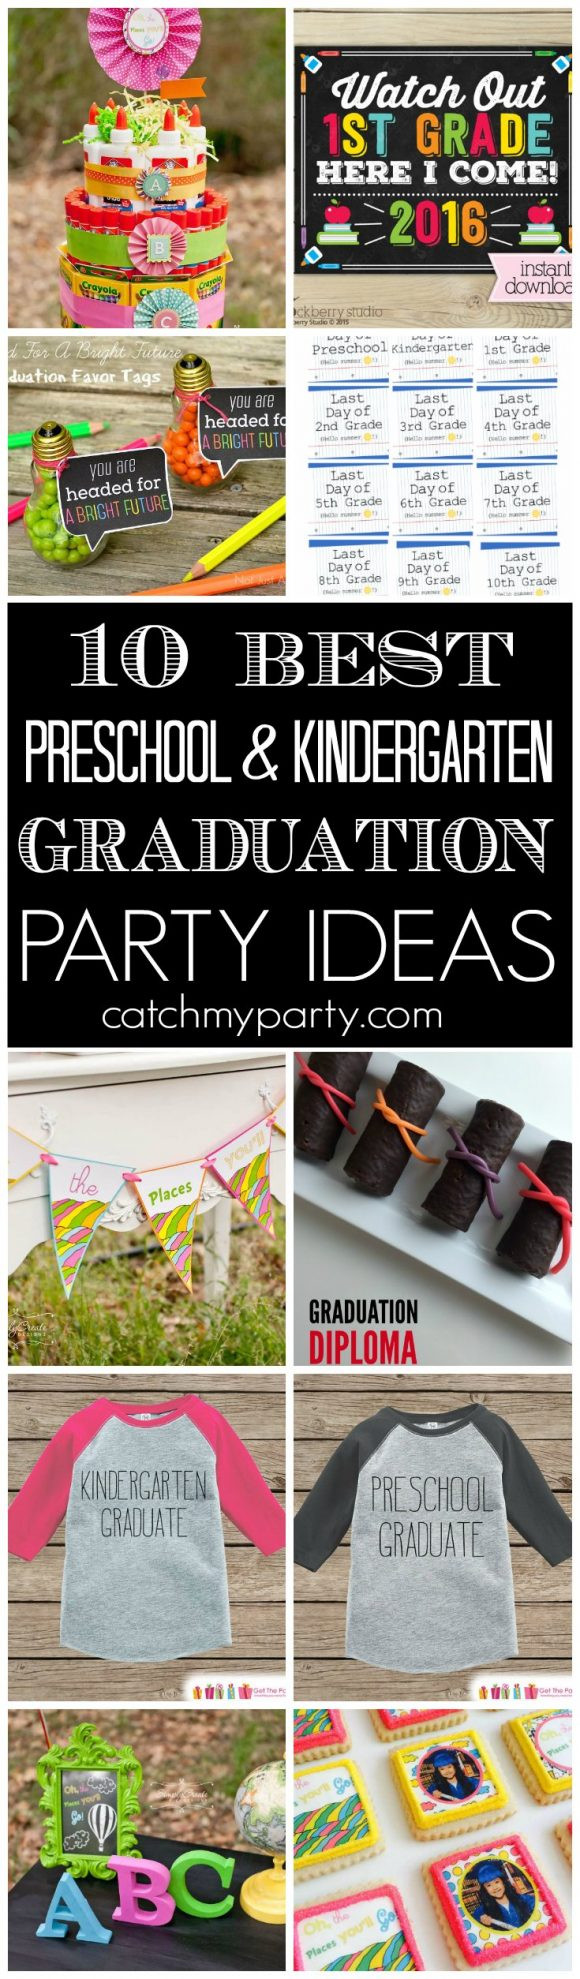 Pre Kindergarten Graduation Party Ideas
 10 Best Preschool & Kindergarten Graduation Party Ideas